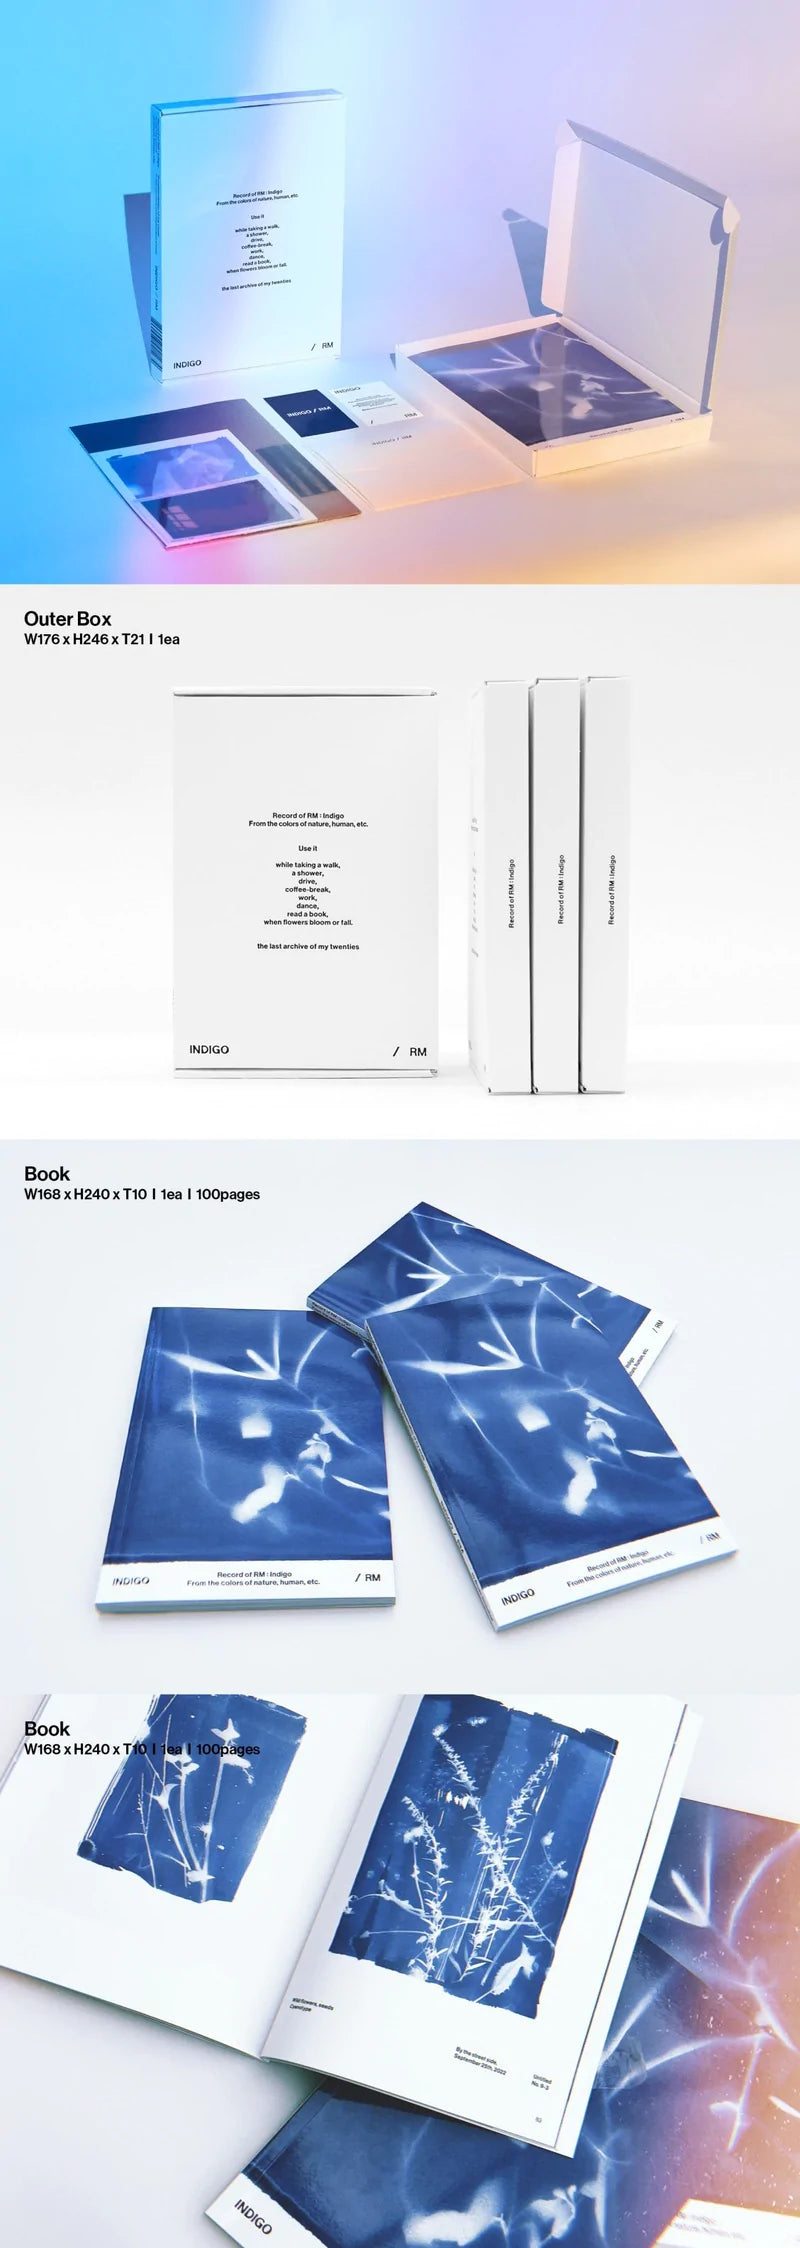 BTS RM 1ST SOLO ALBUM [INDIGO/BOOK EDITION]